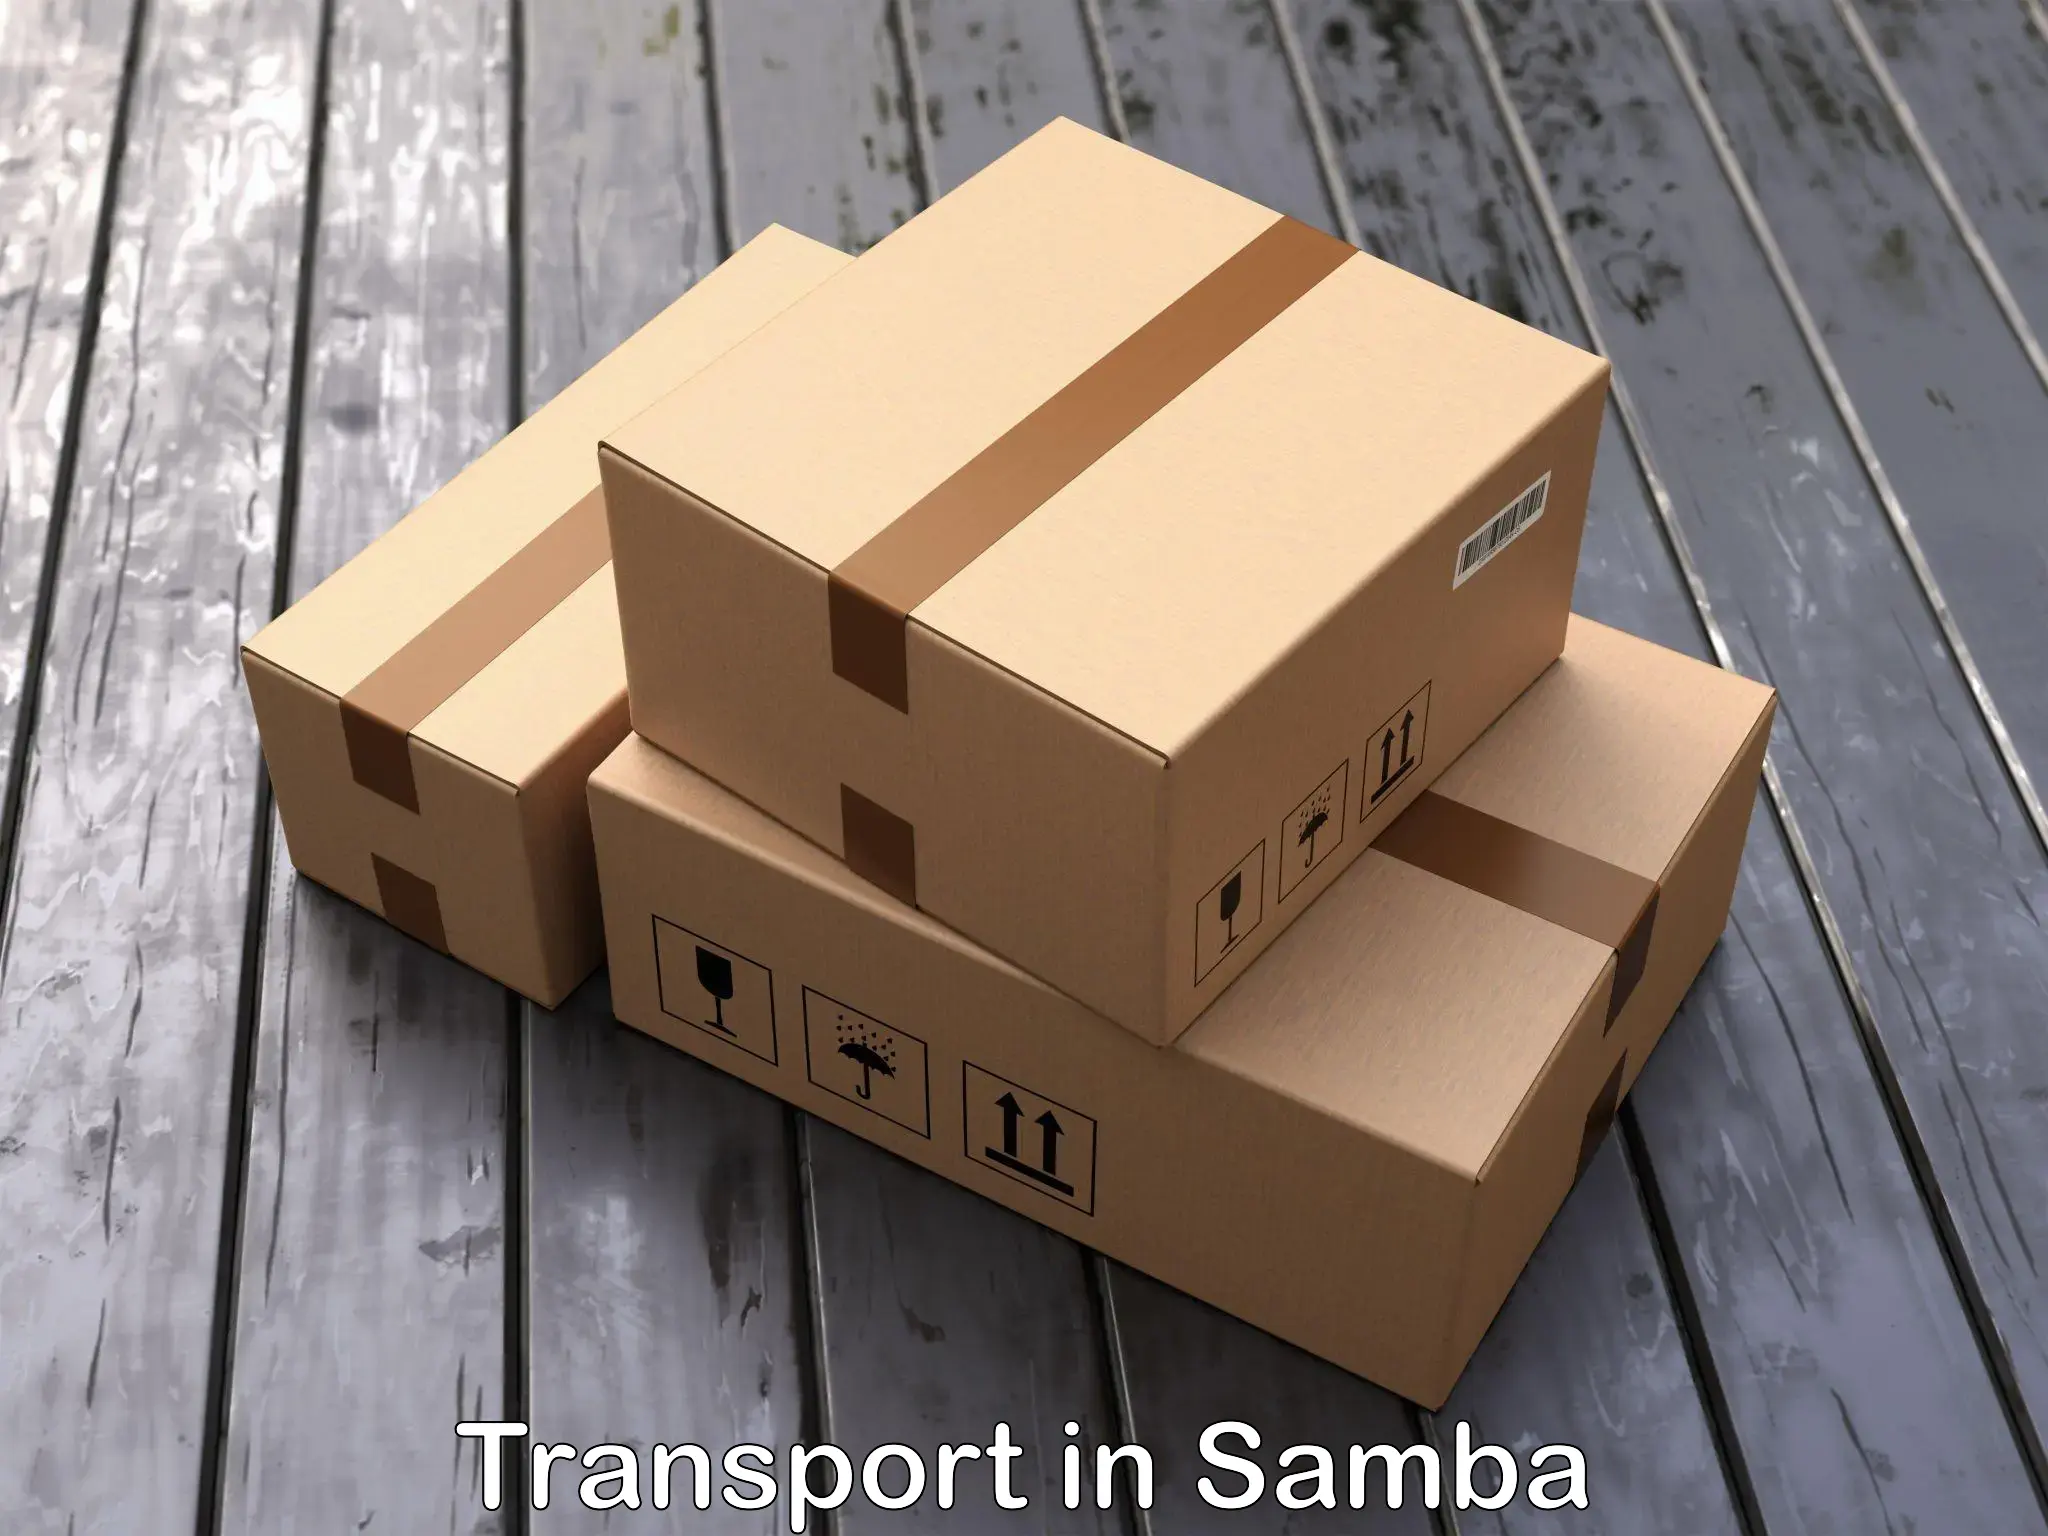 Two wheeler parcel service in Samba